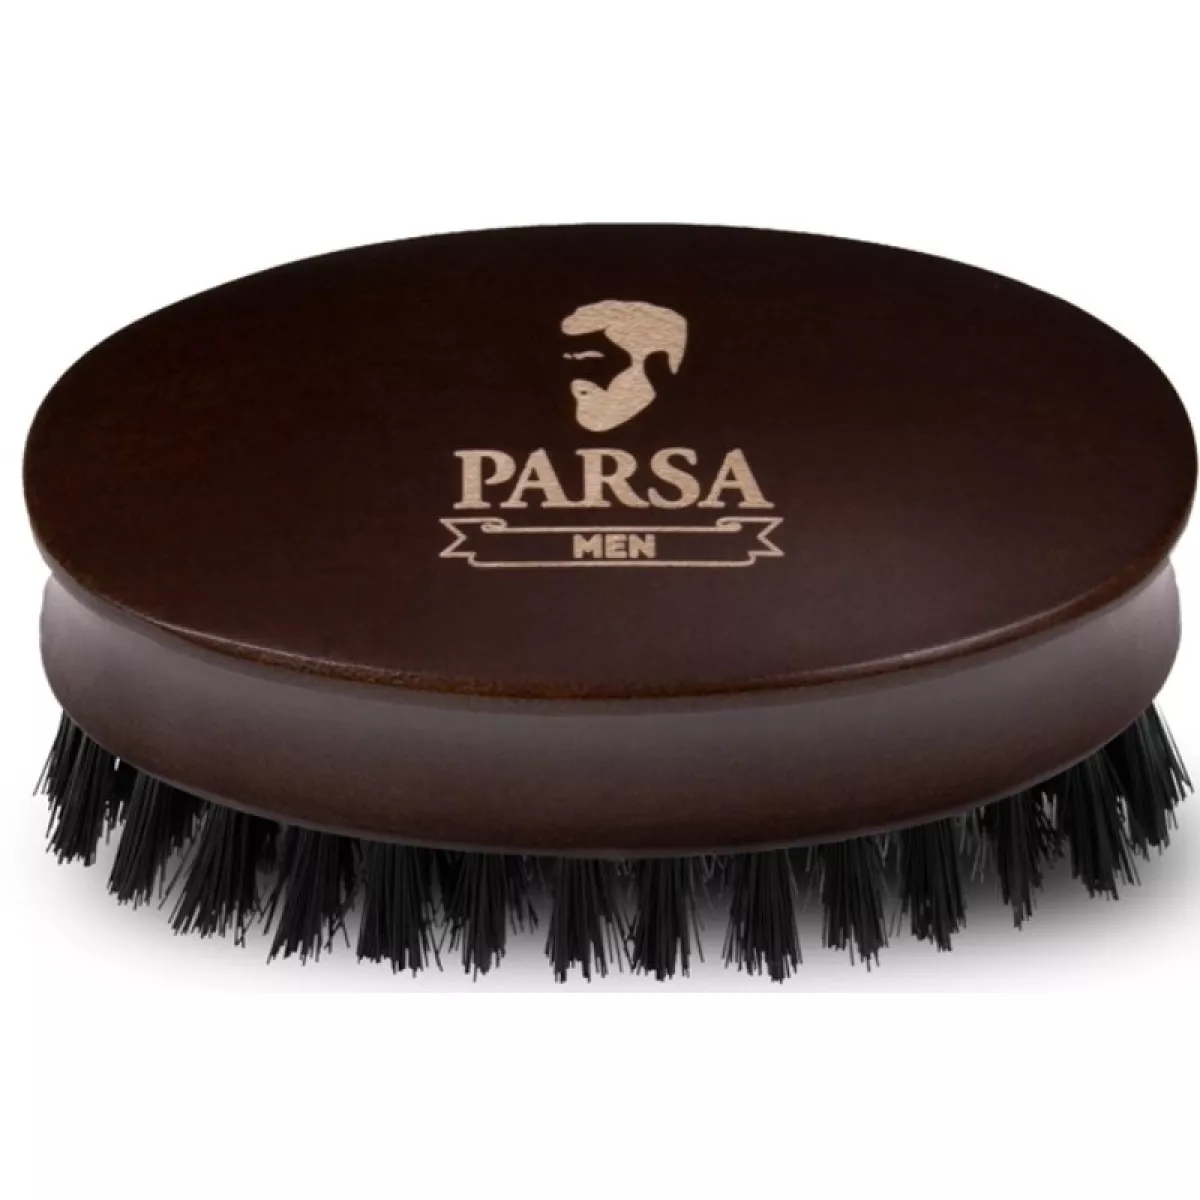 #2 - Parsa Men Beard Brush